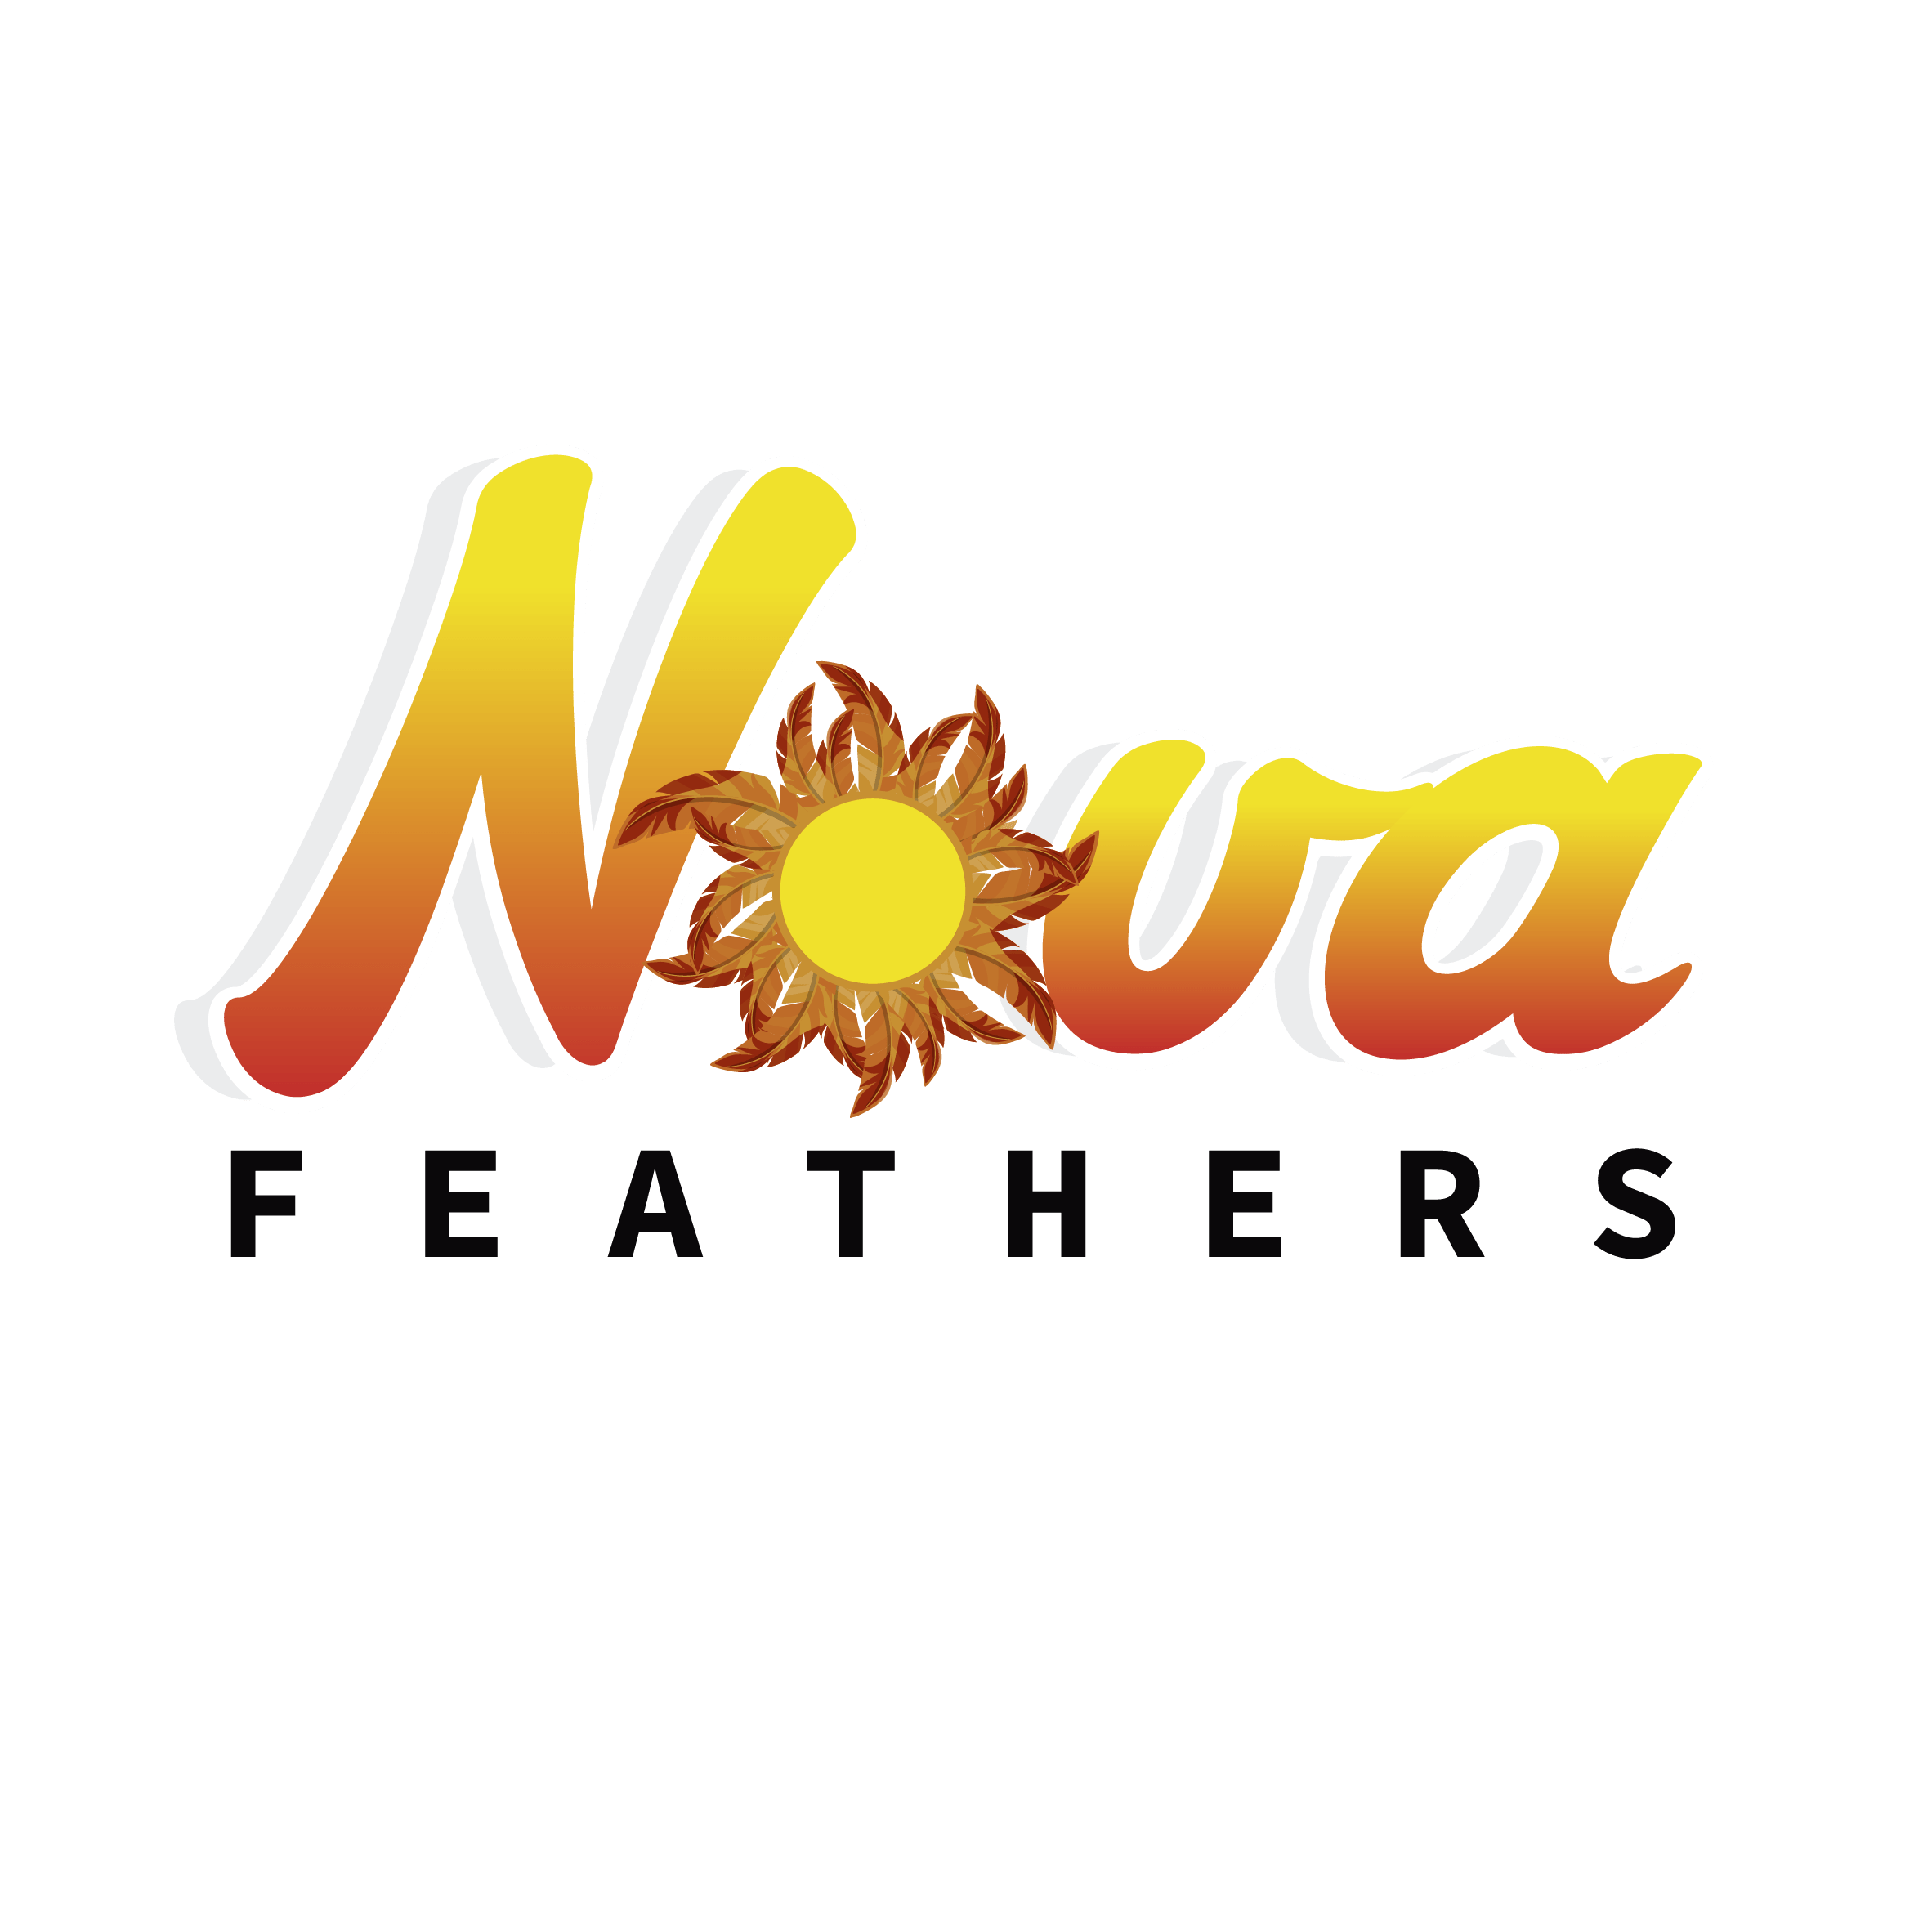 Nova Feathers